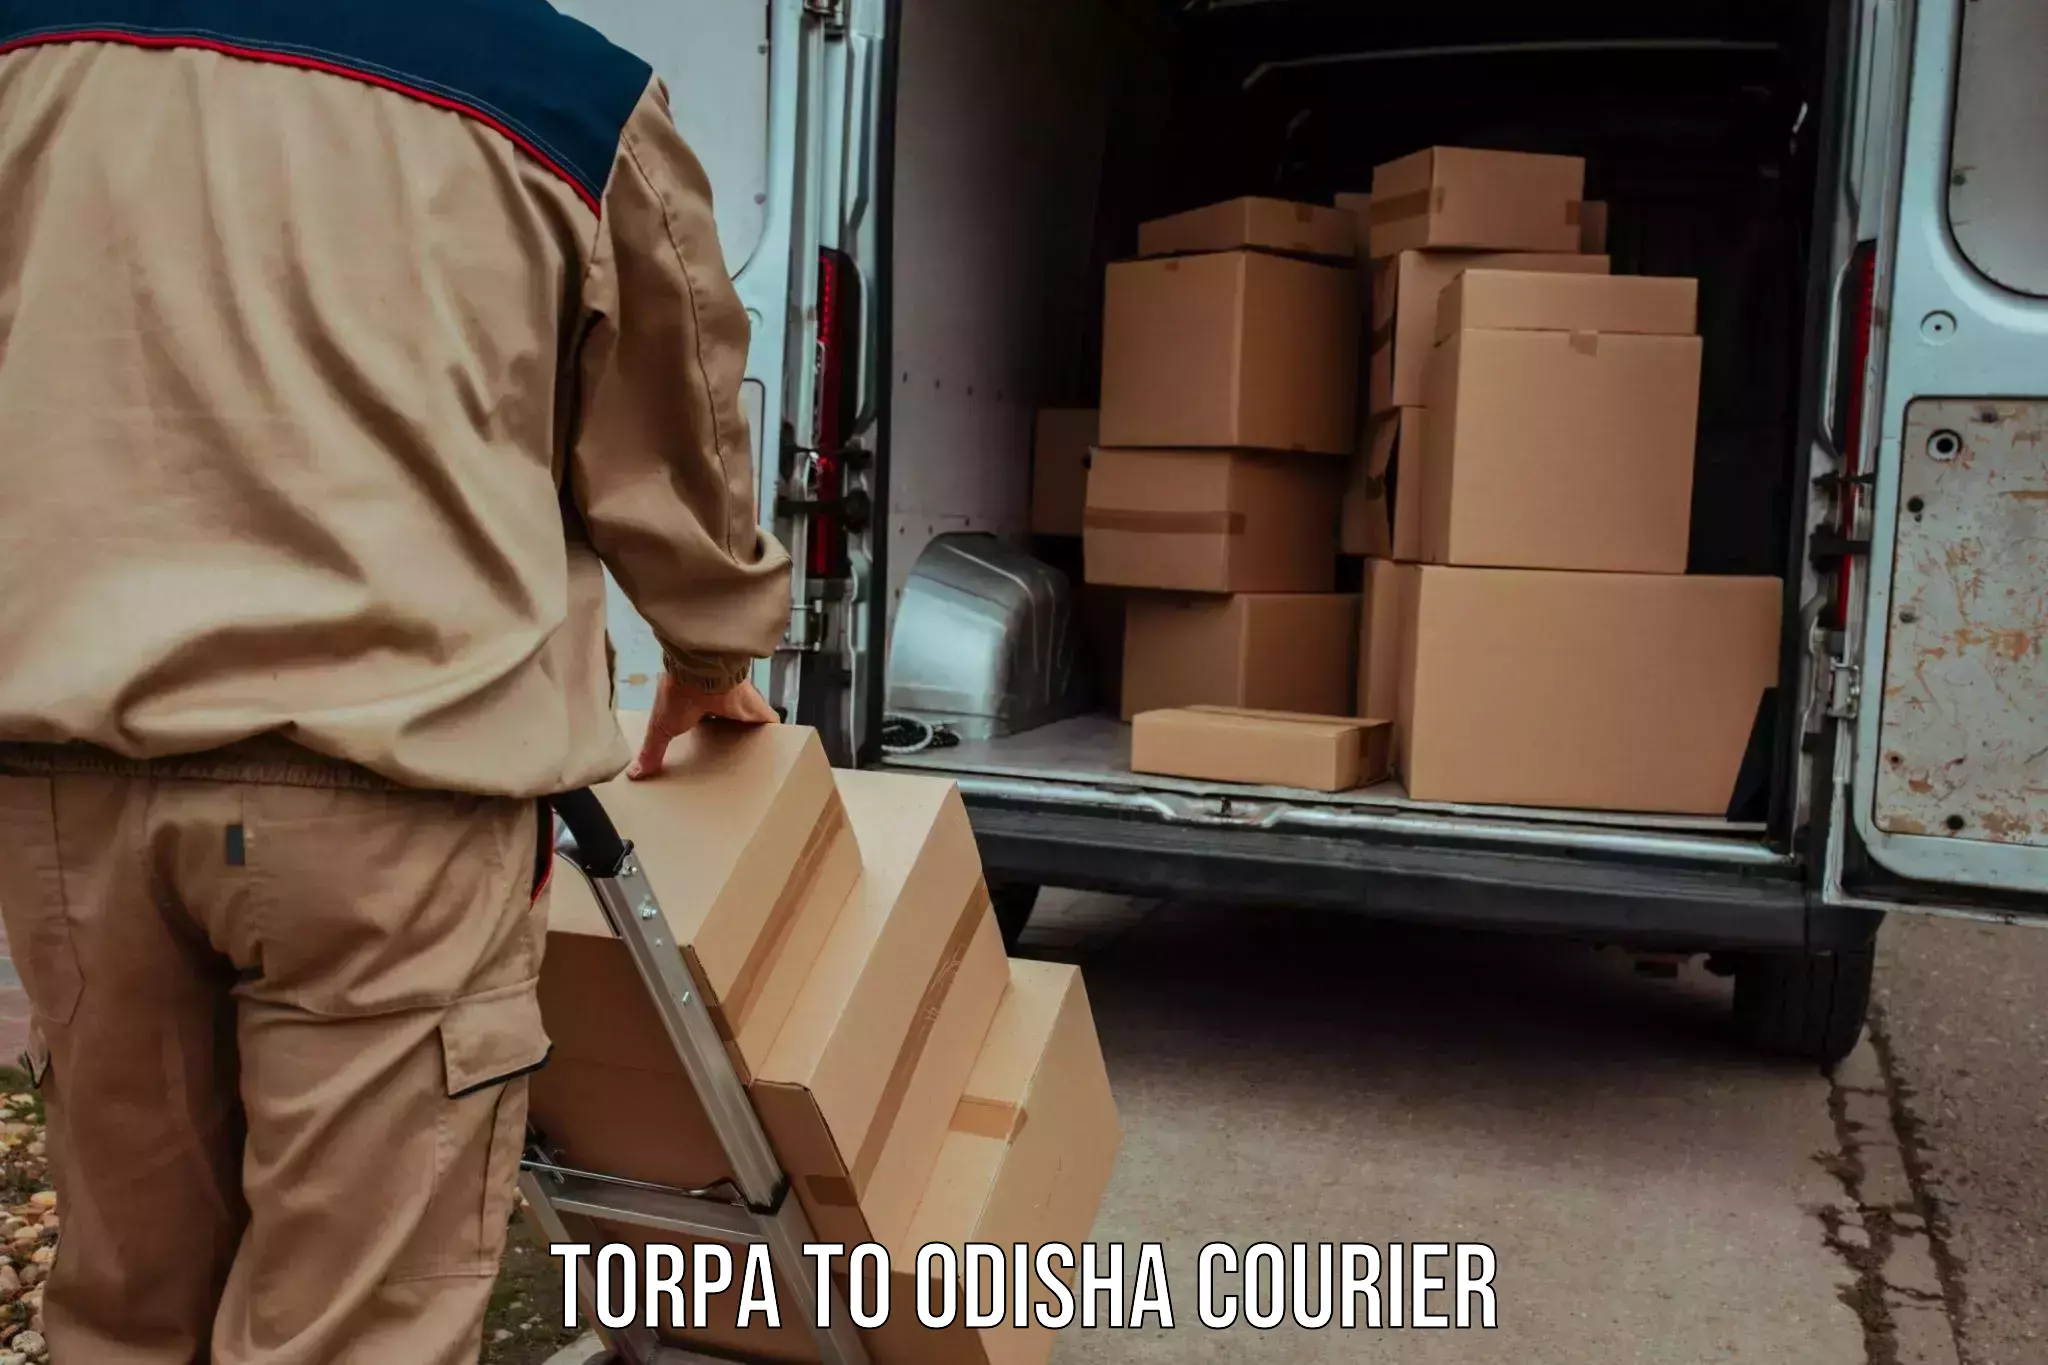 Courier service comparison Torpa to Saintala